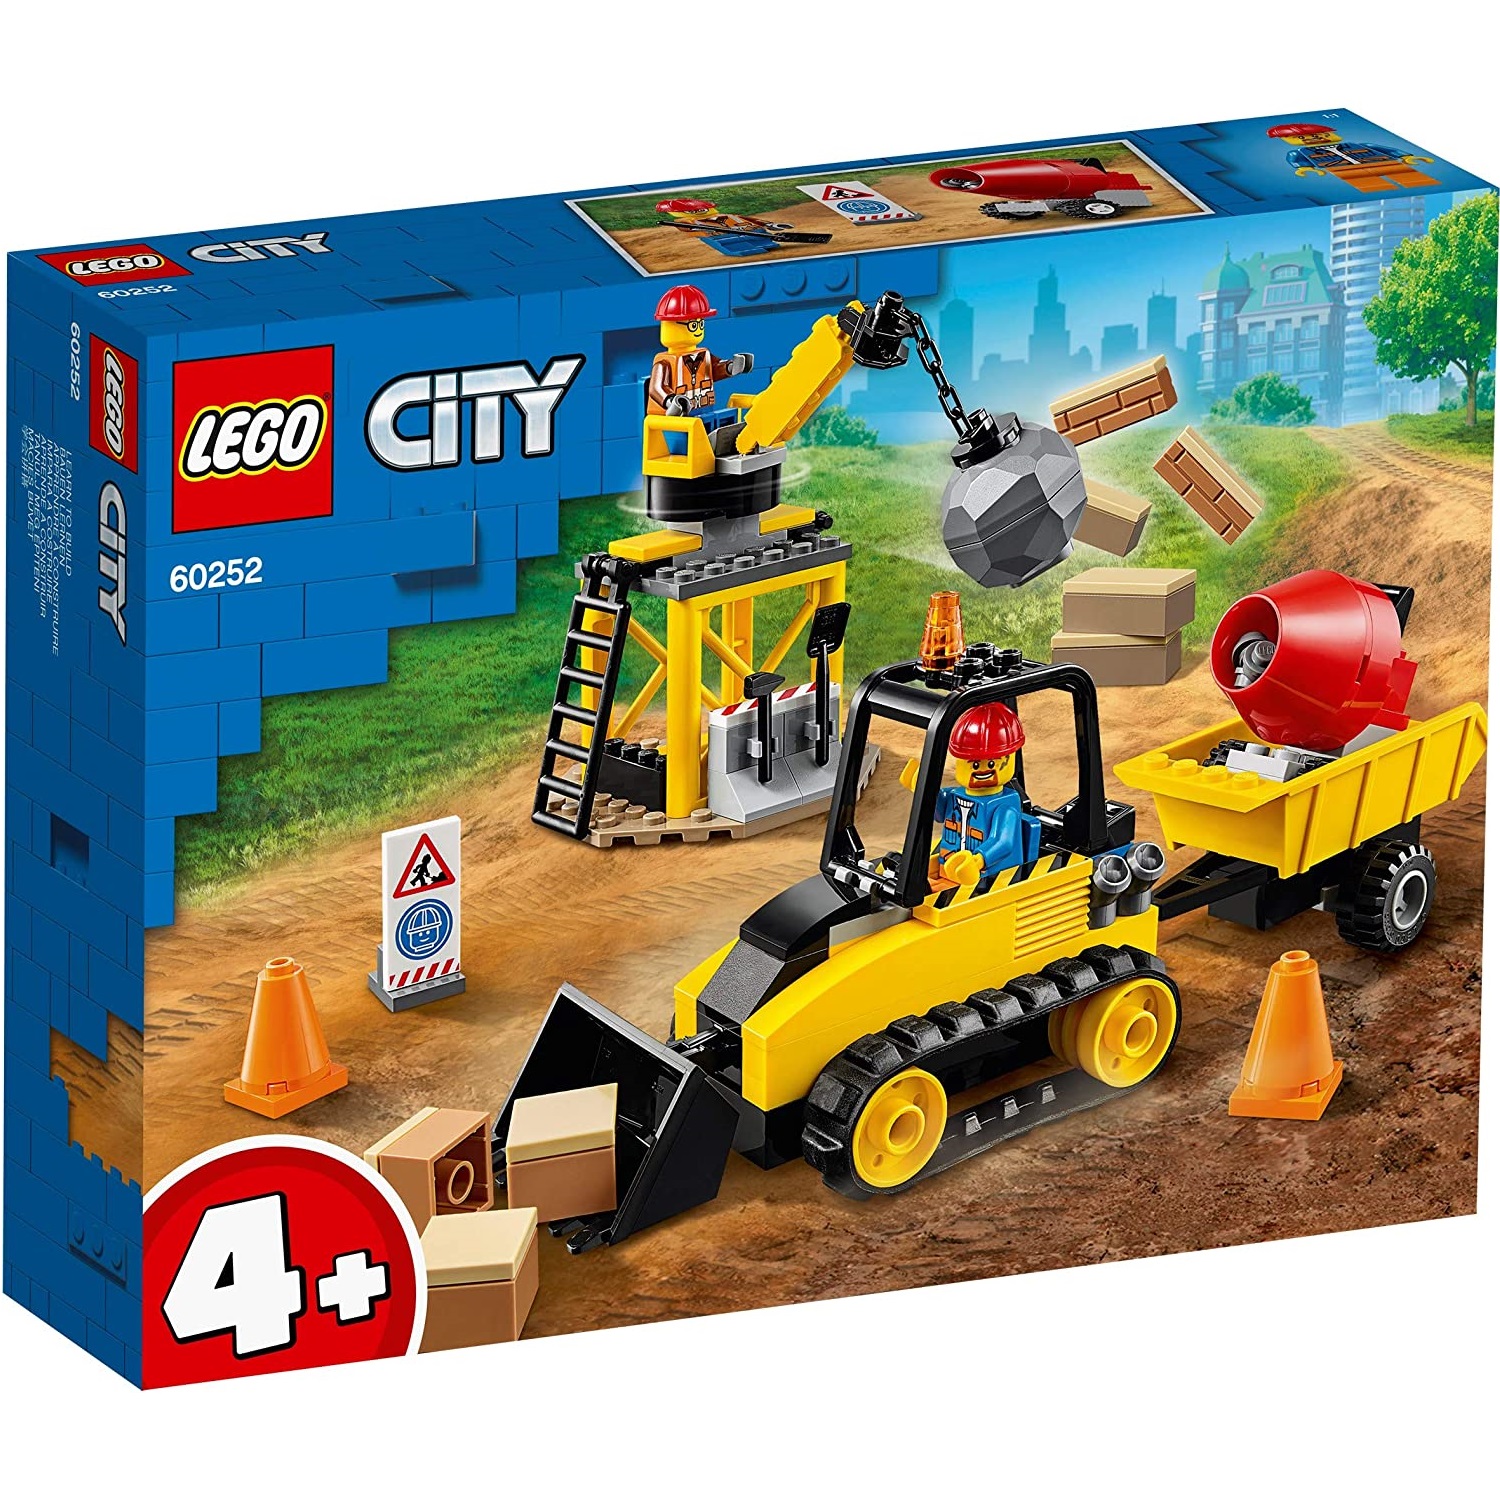 Buldozer pentru constructii Lego City 60252, +4 ani, Lego